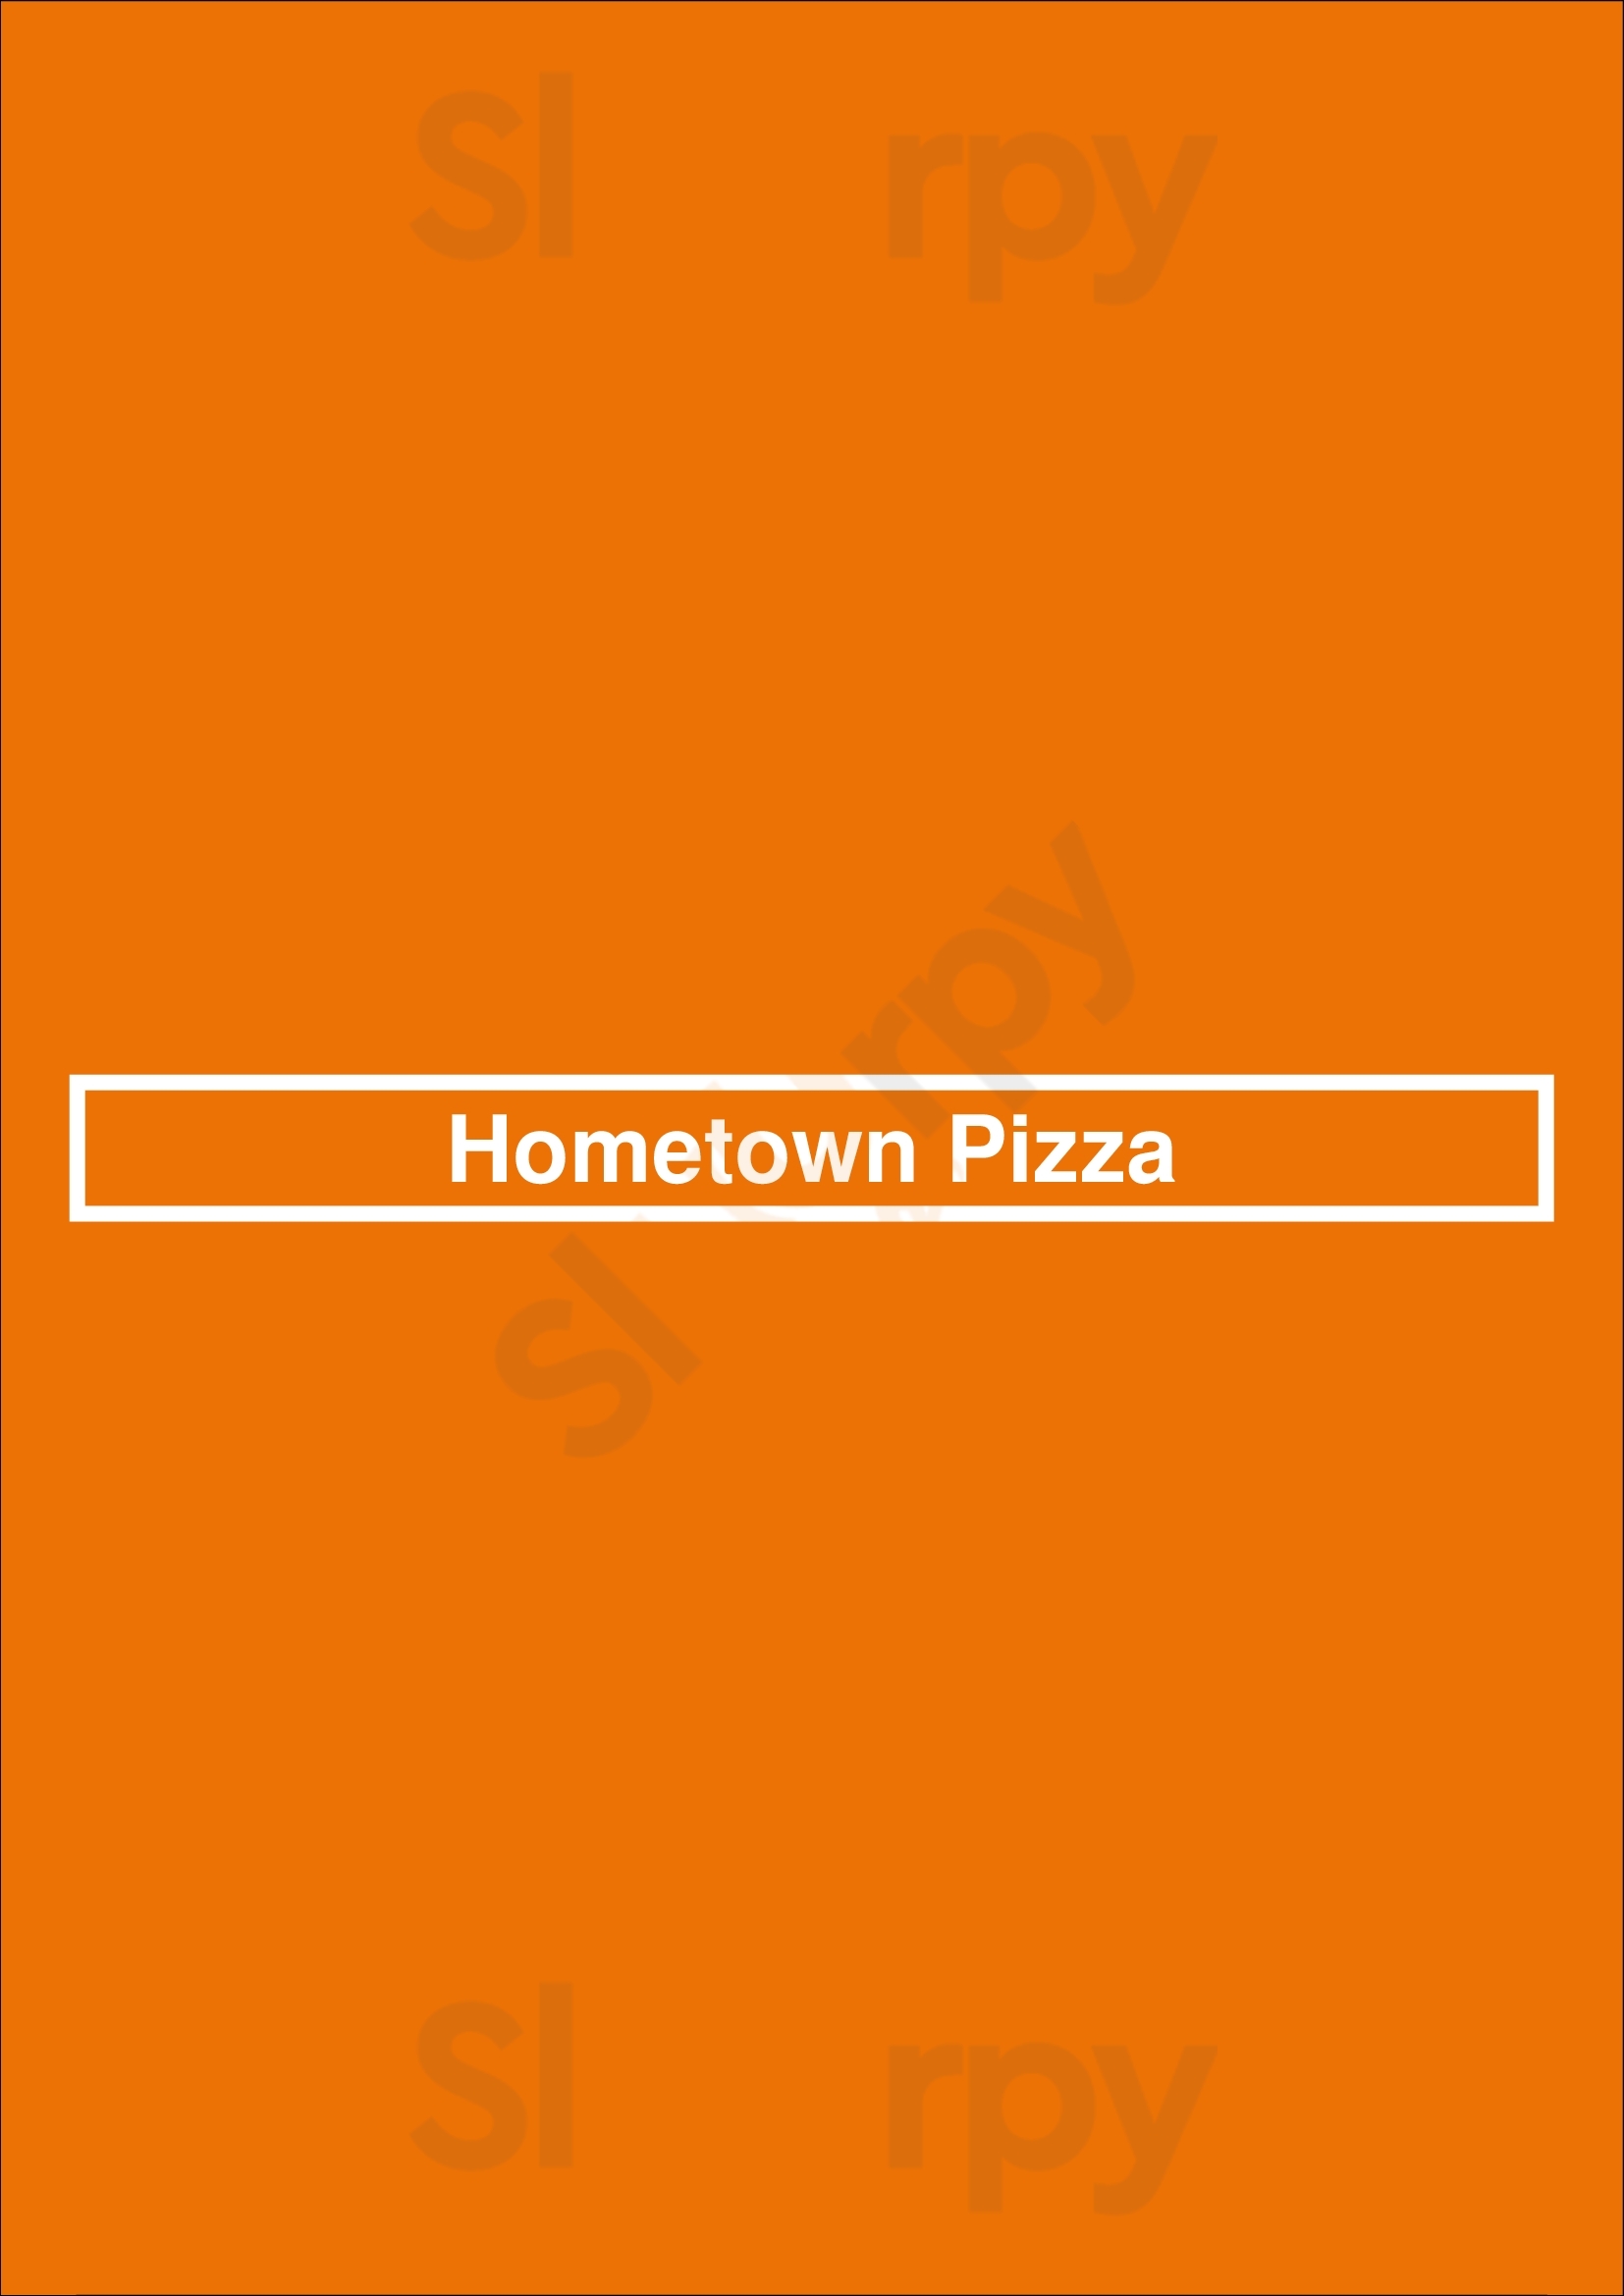 Hometown Pizza Louisville Menu - 1